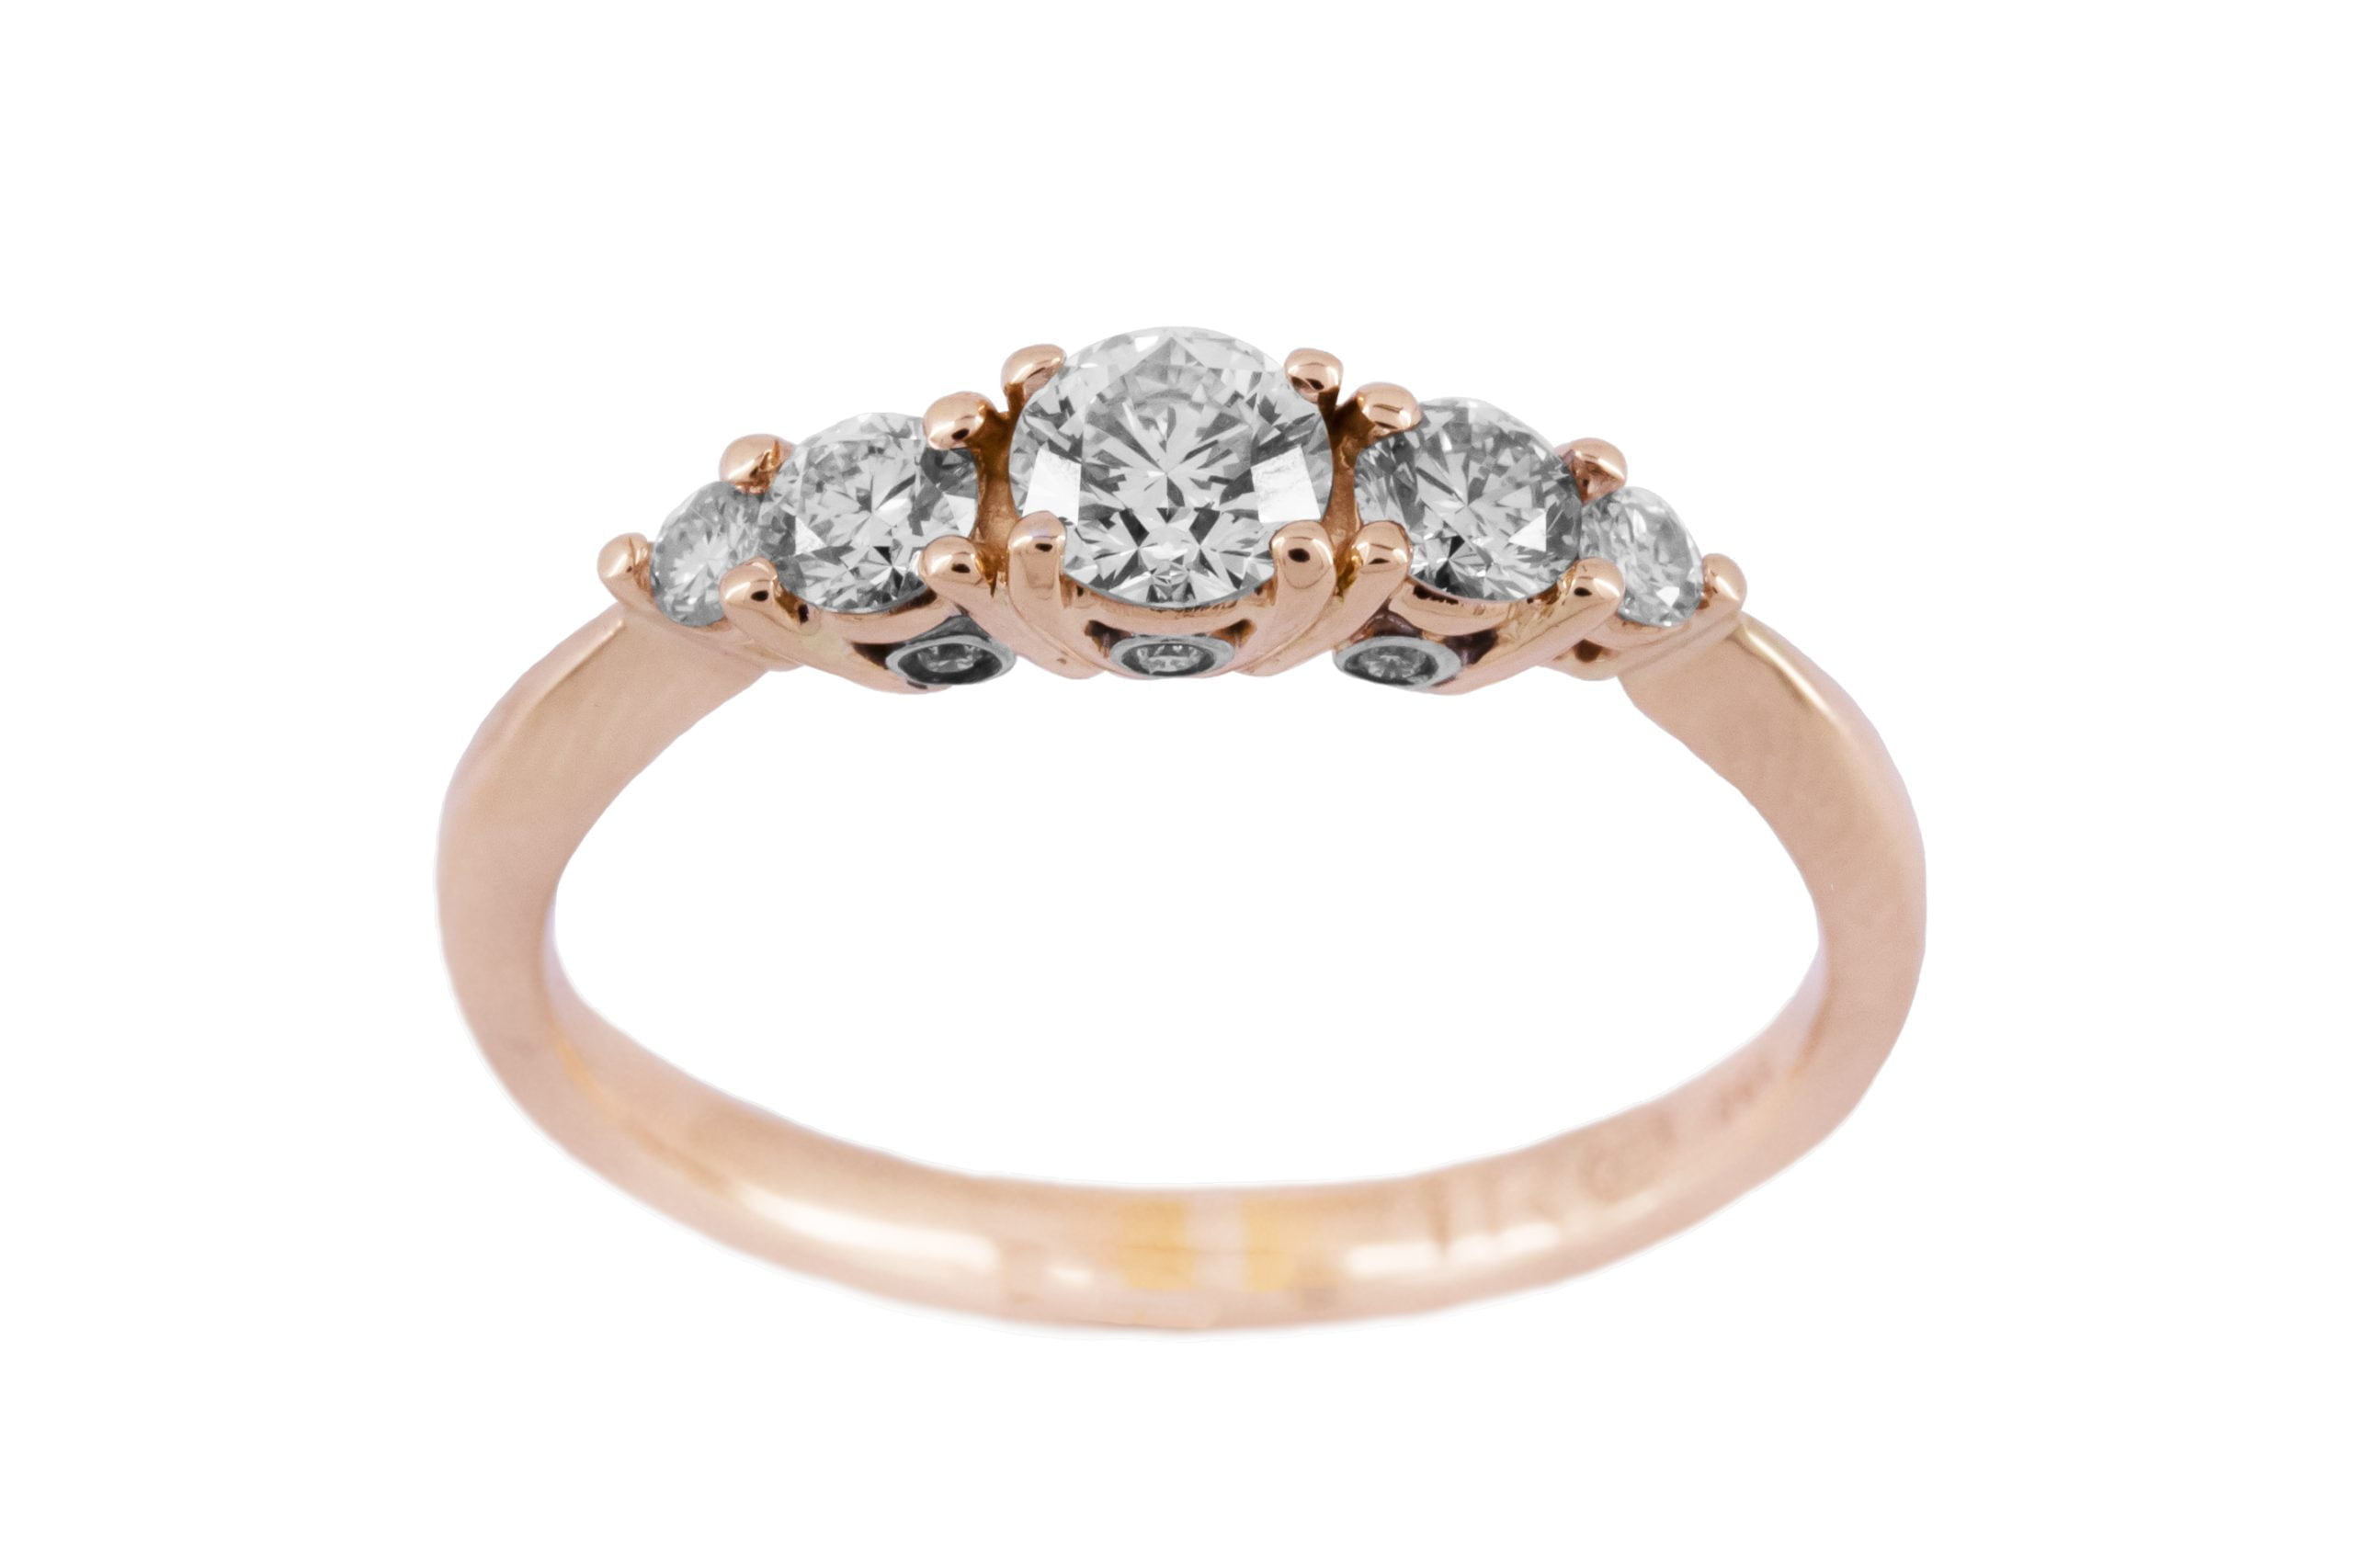 Diamond Engagement & Wedding Rings Cape Town - Cape Diamonds : Cape Diamonds